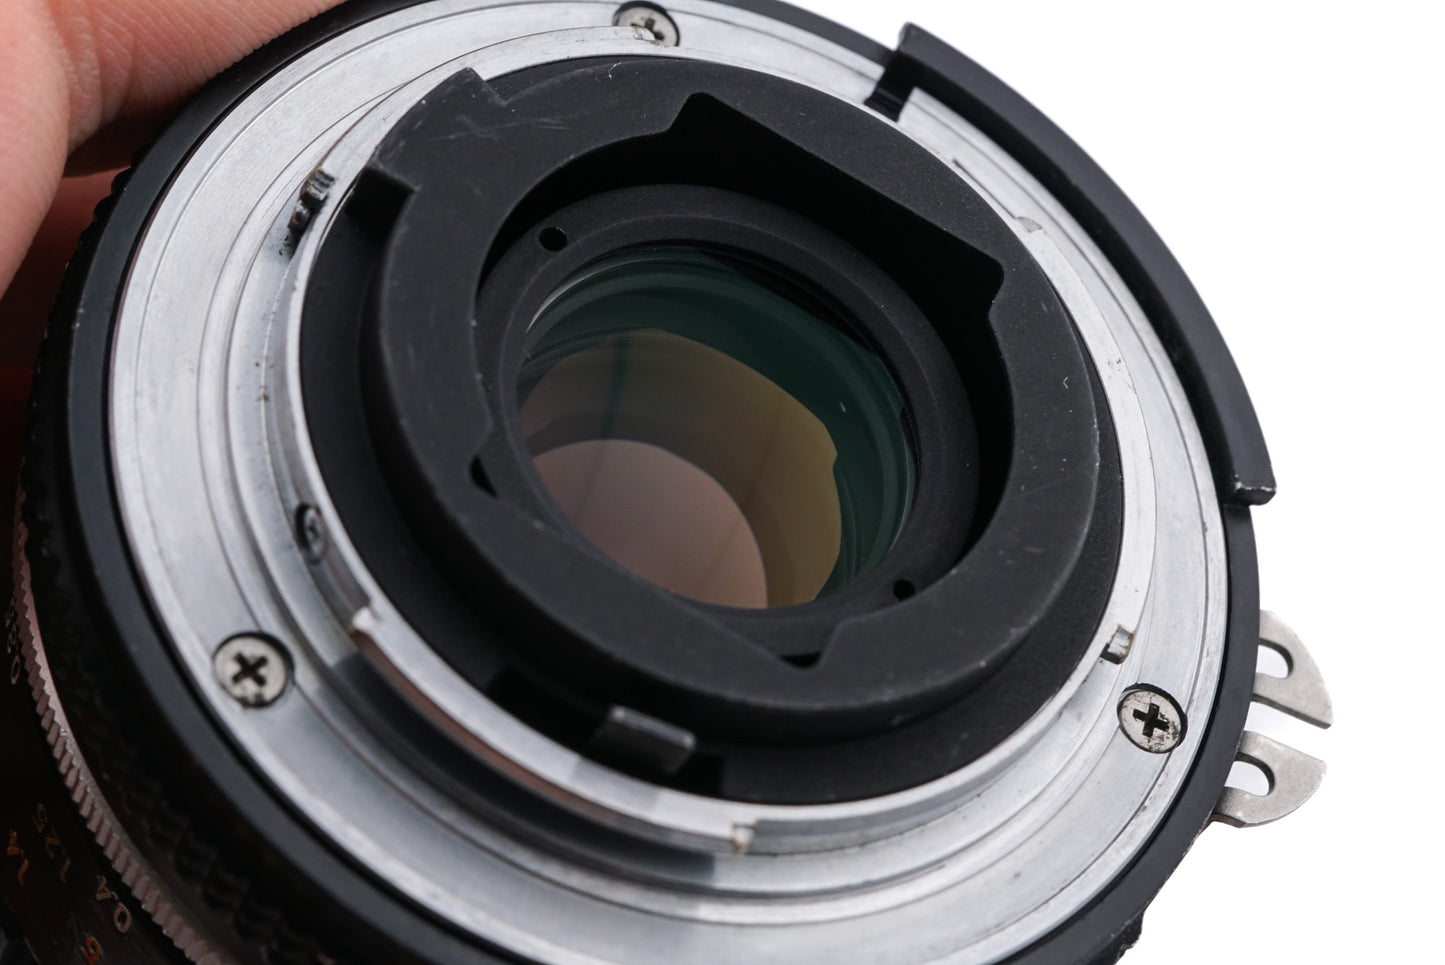 Nikon 55mm f2.8 Micro-Nikkor AI-S